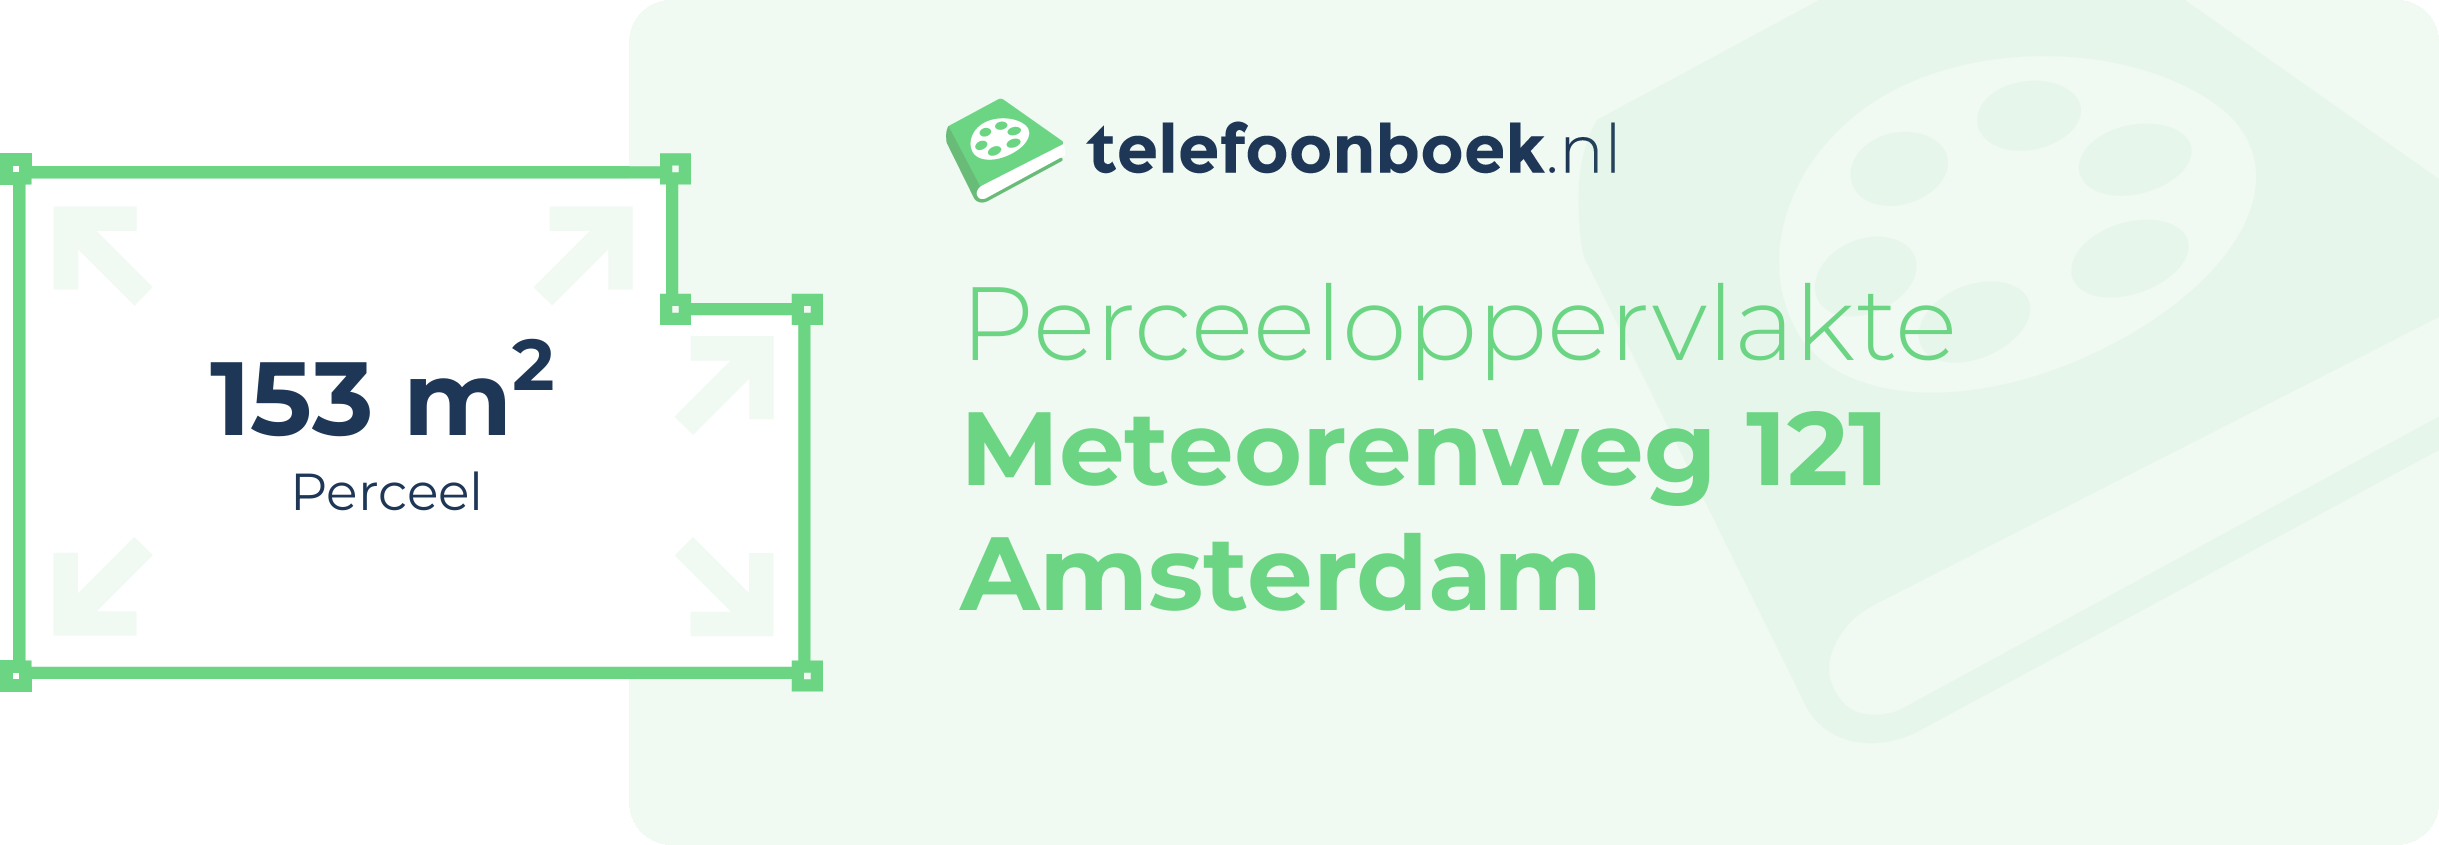 Perceeloppervlakte Meteorenweg 121 Amsterdam